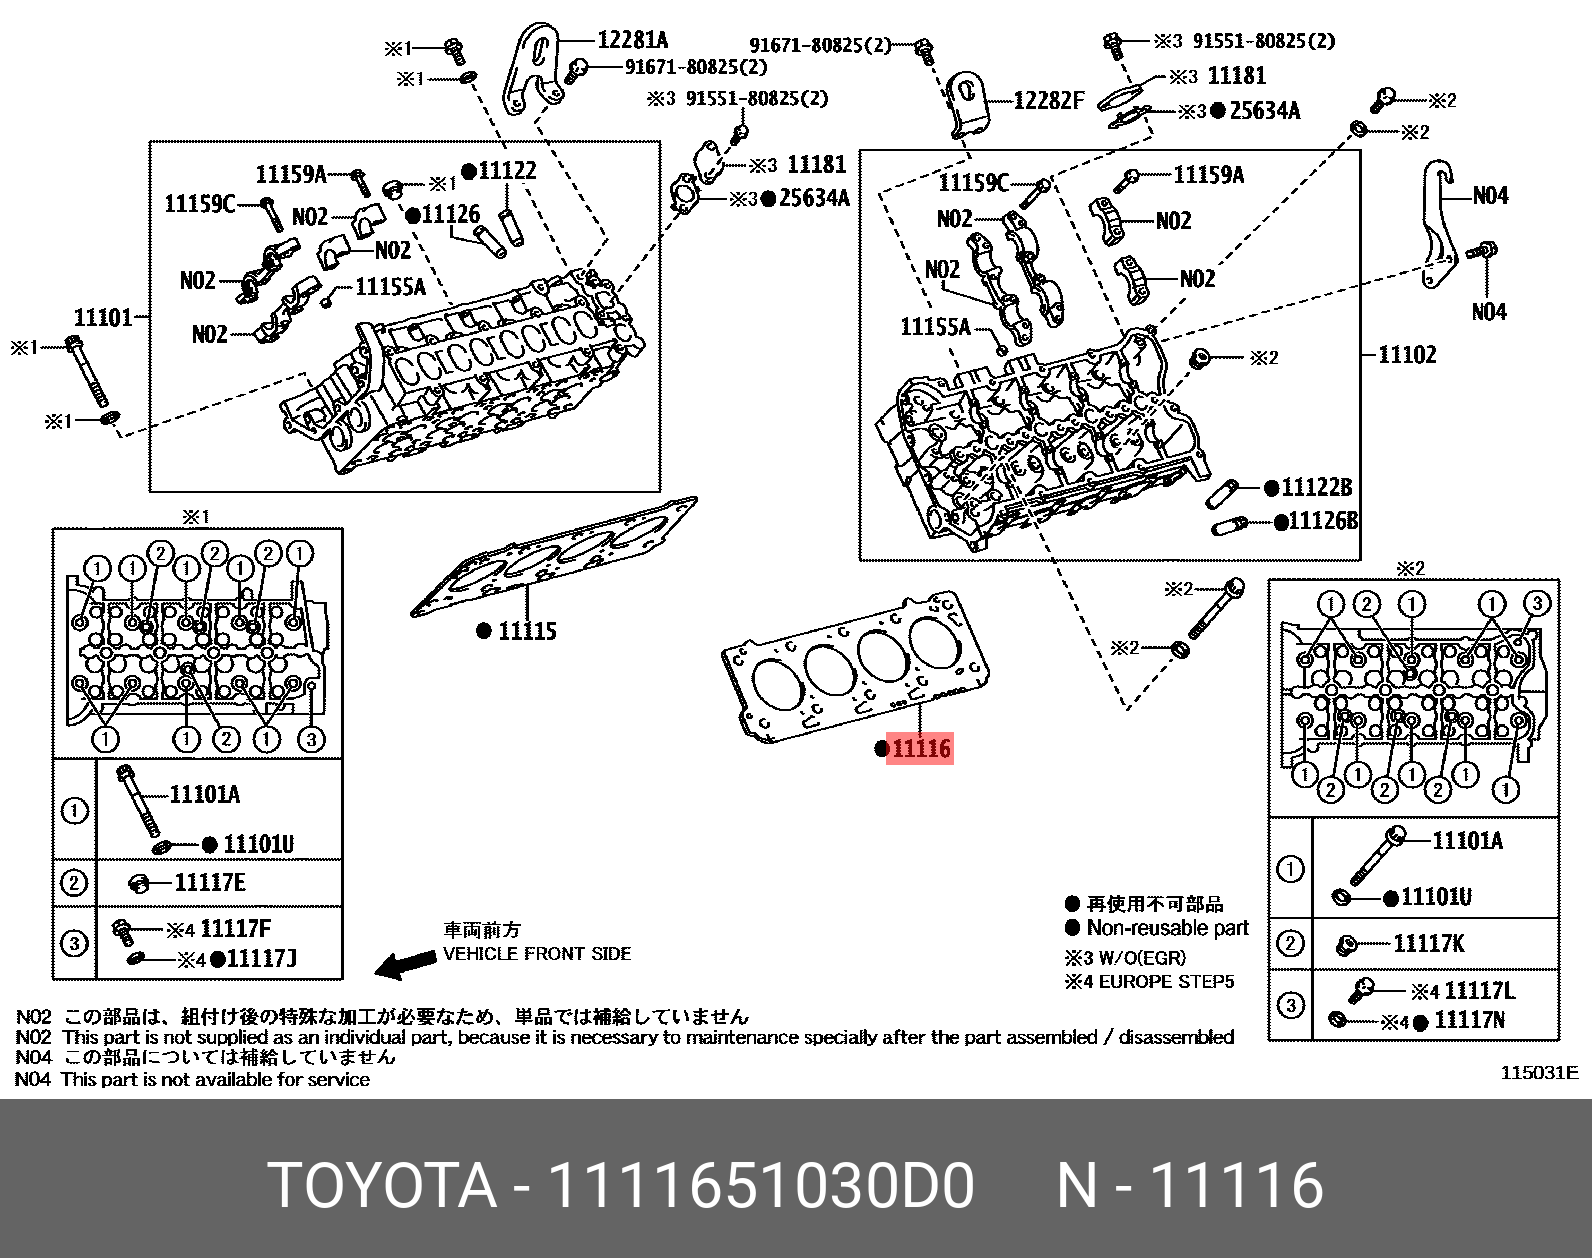 Прокладка головки блока цилиндров - Toyota 11116-51030-D0